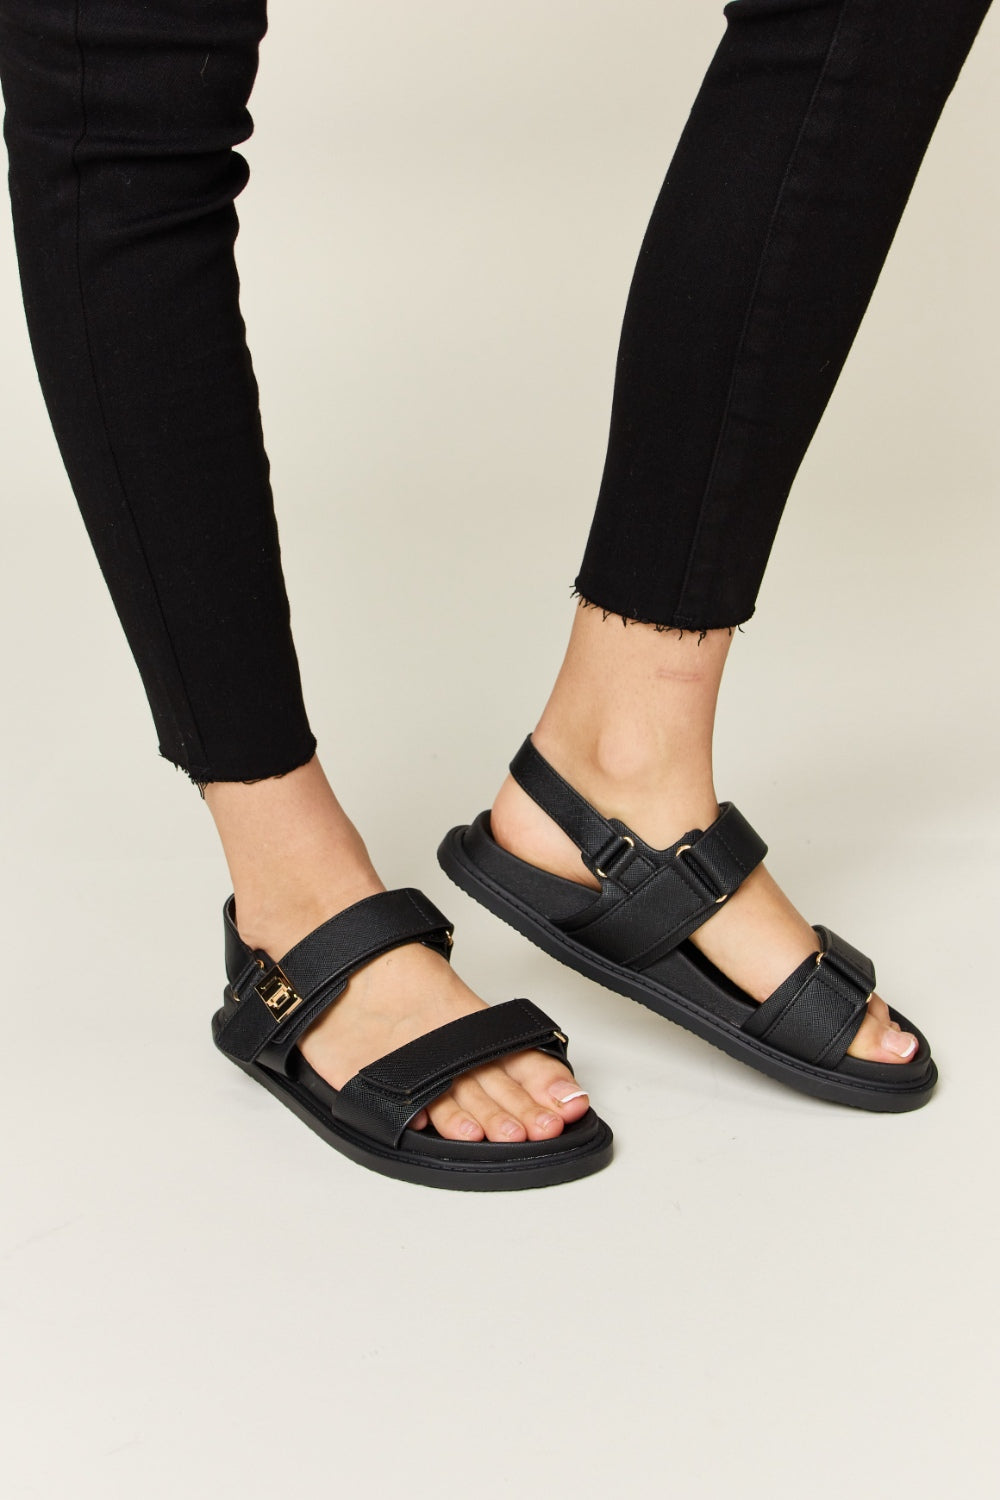 WILD DIVA Velcro Double Buckle Strap Slingback Ankle Strap Black Flat Sandals